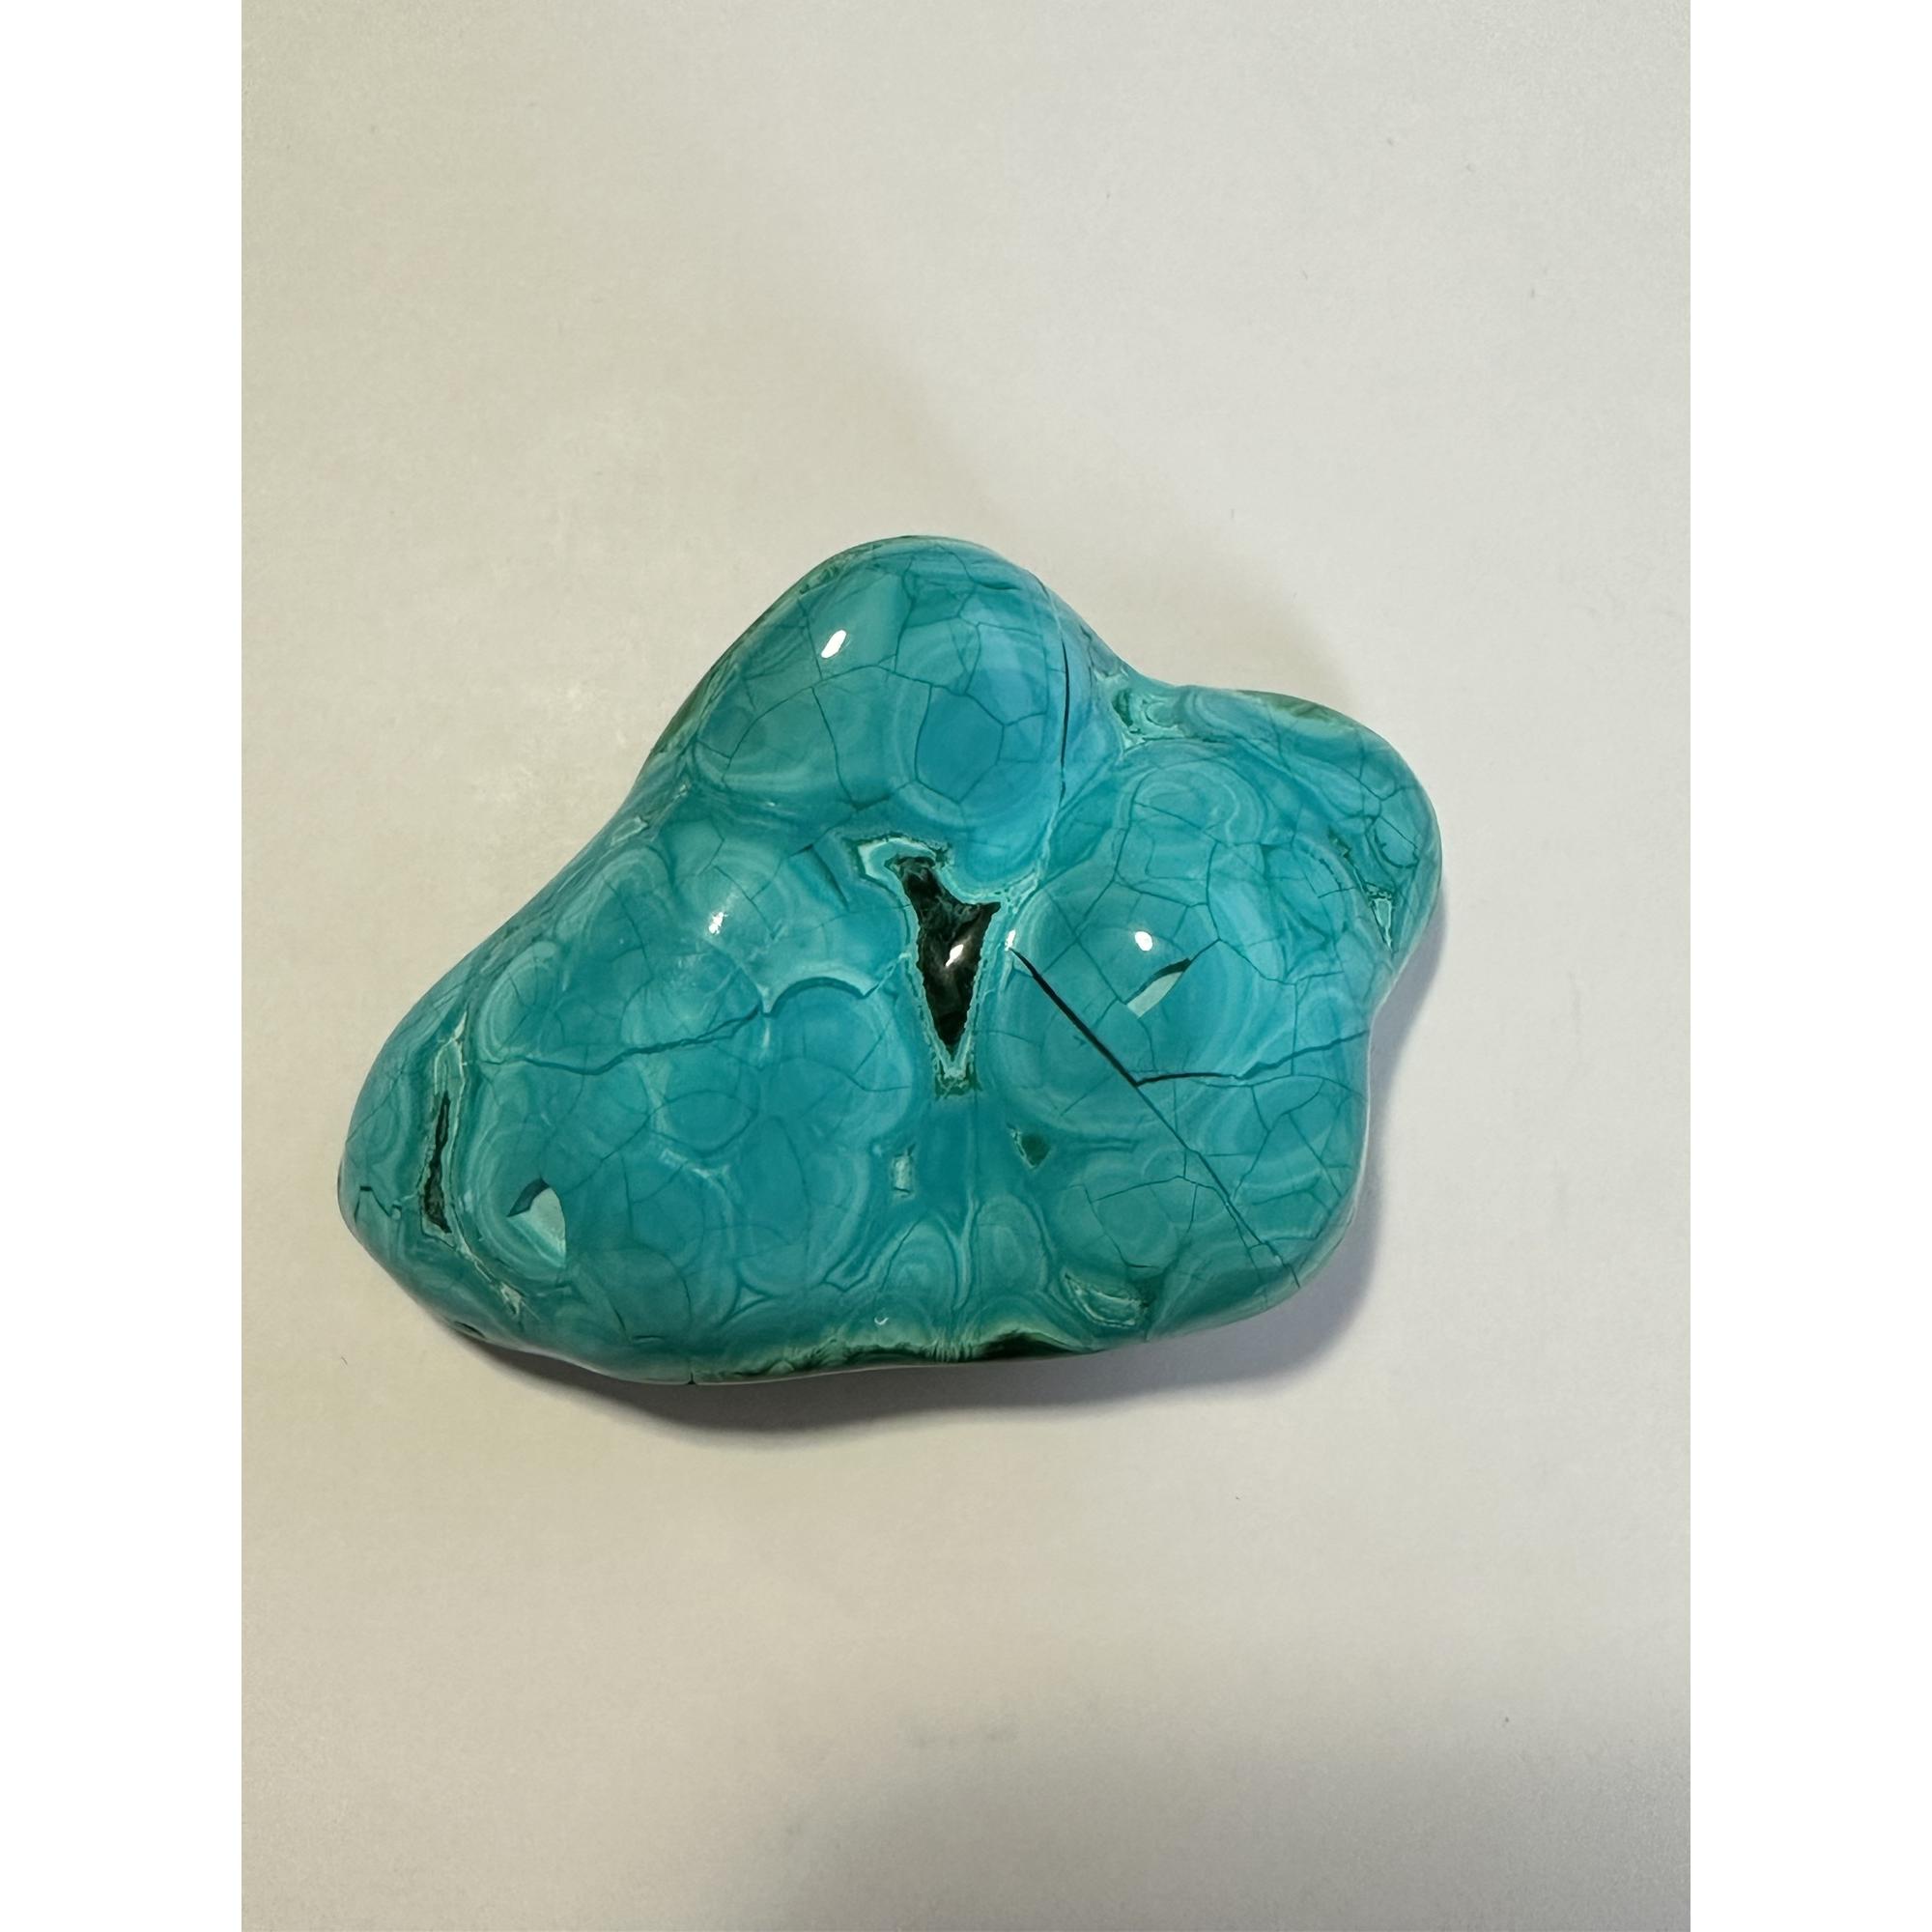 Chrysocolla with Malachite, deep ocean blue color, 3″x 2 1/4″ Prehistoric Online